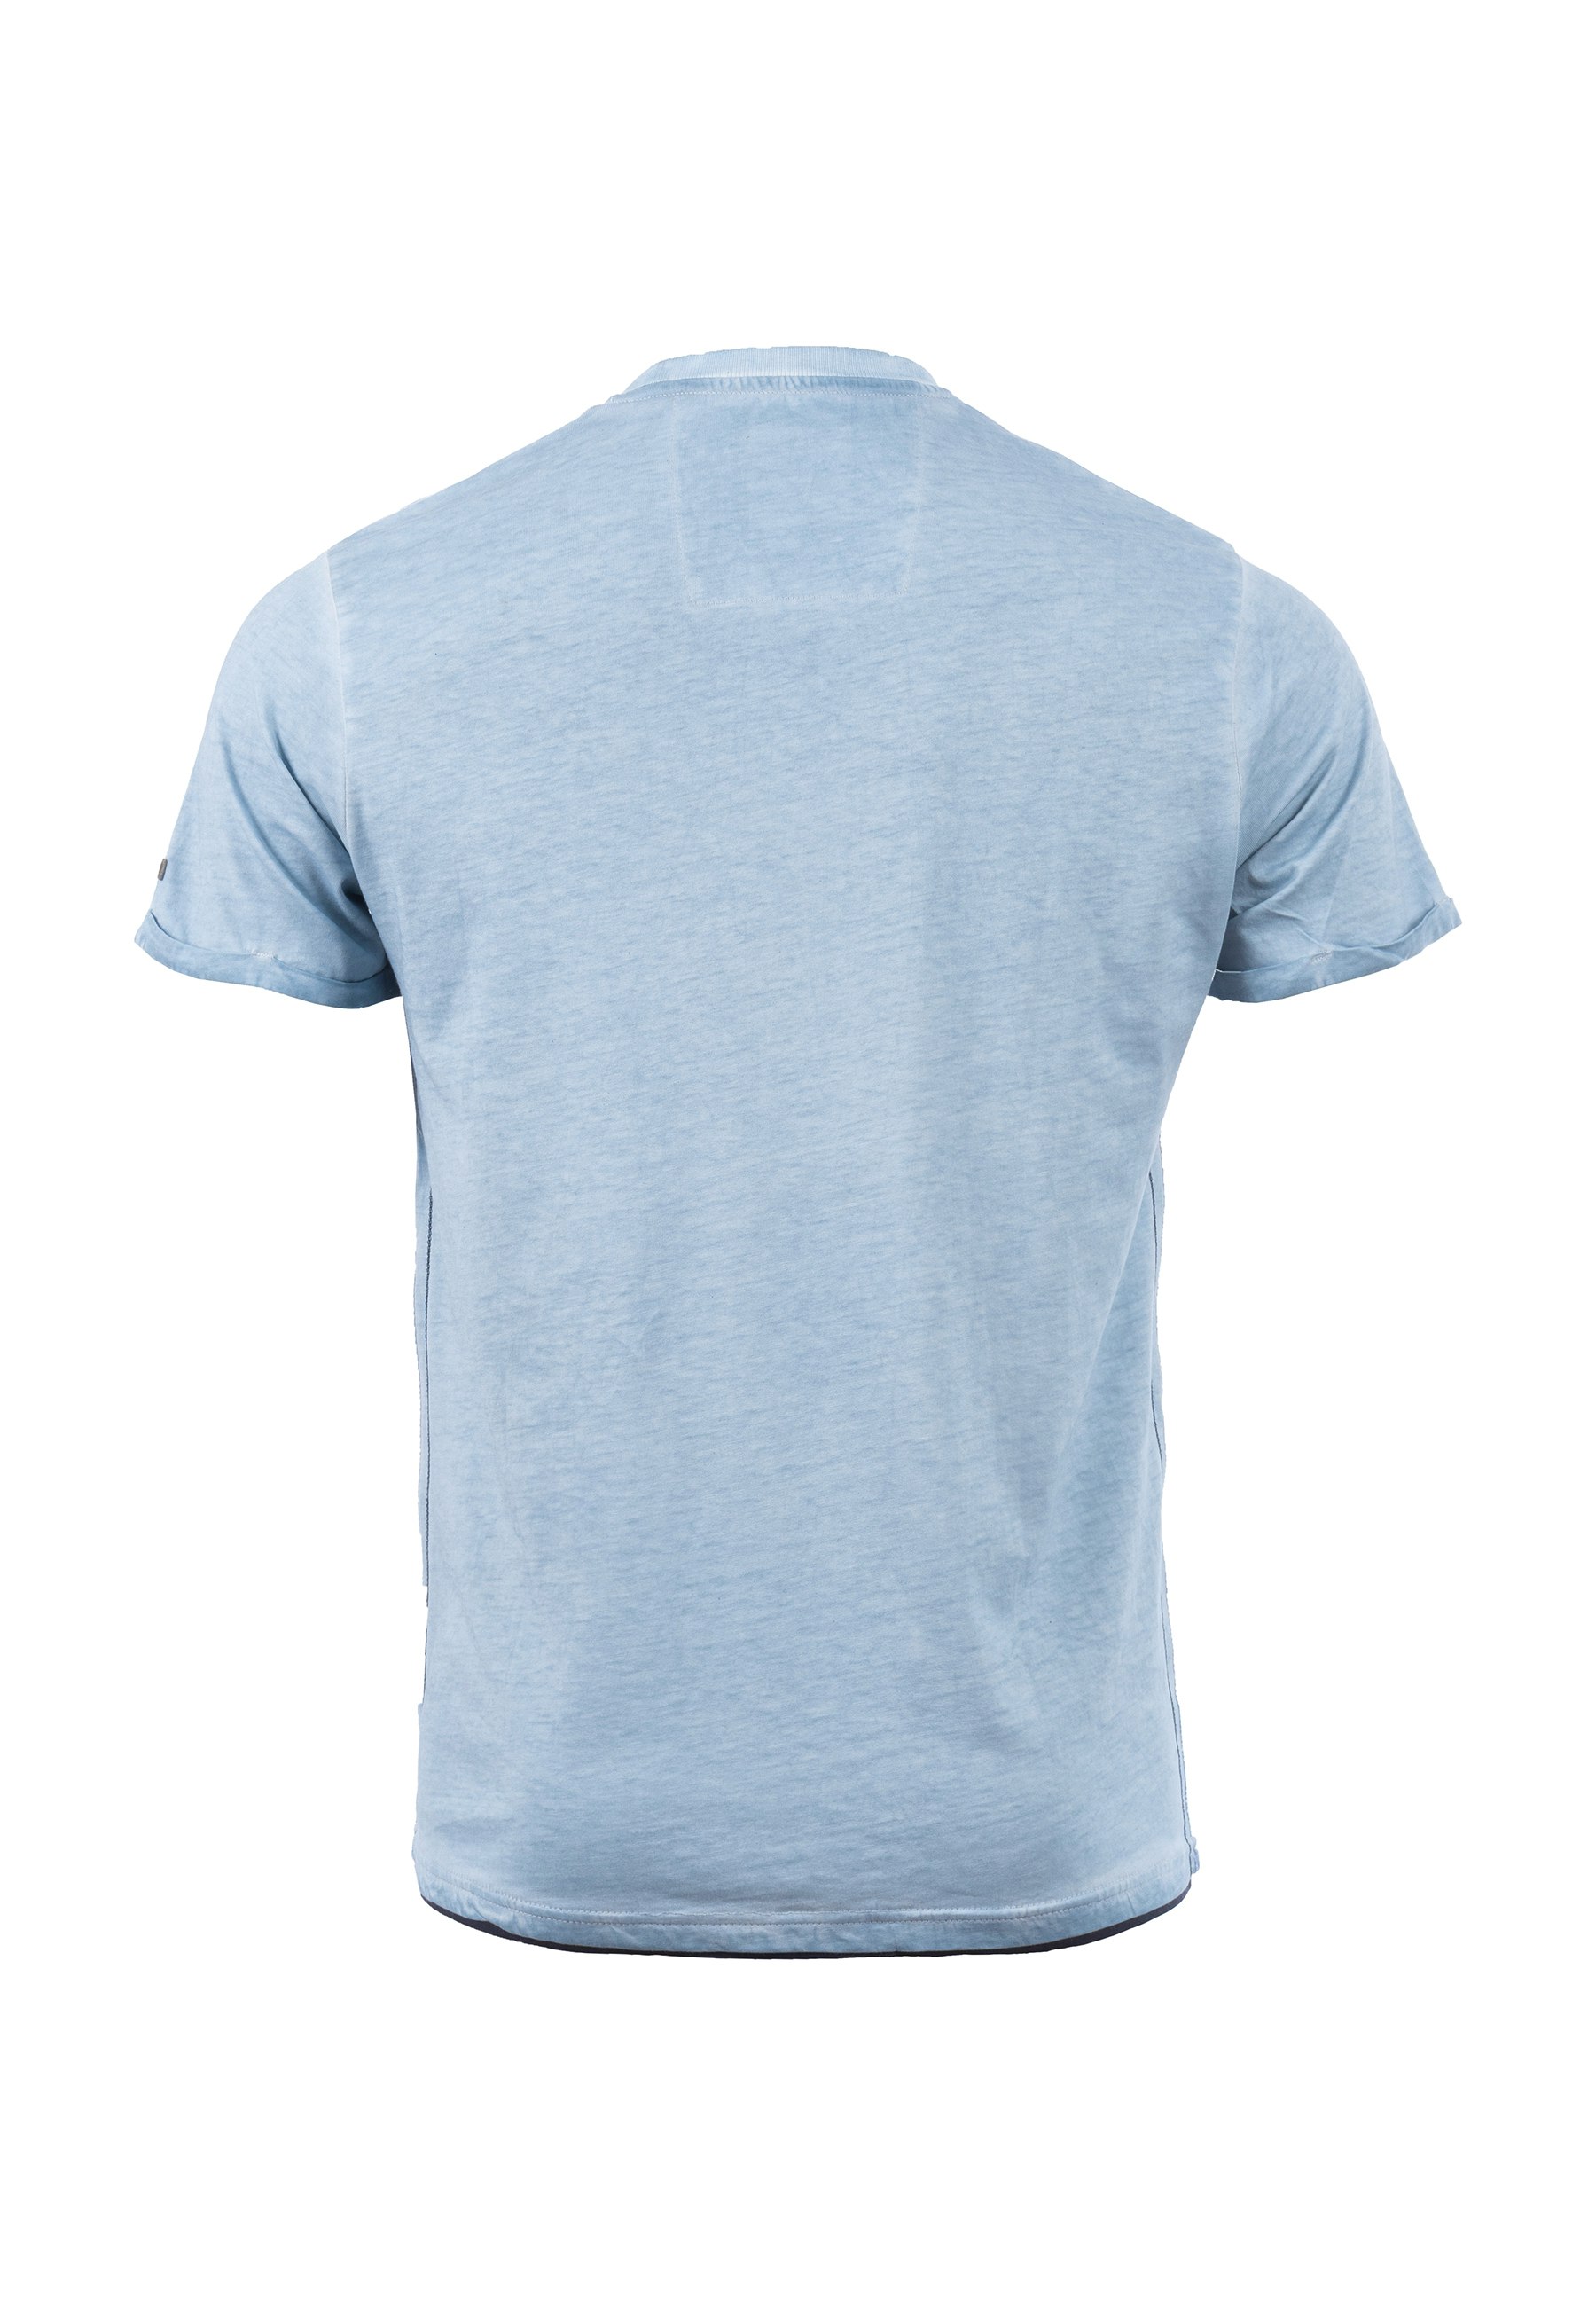 Questo Shirt Fililbert stone blue